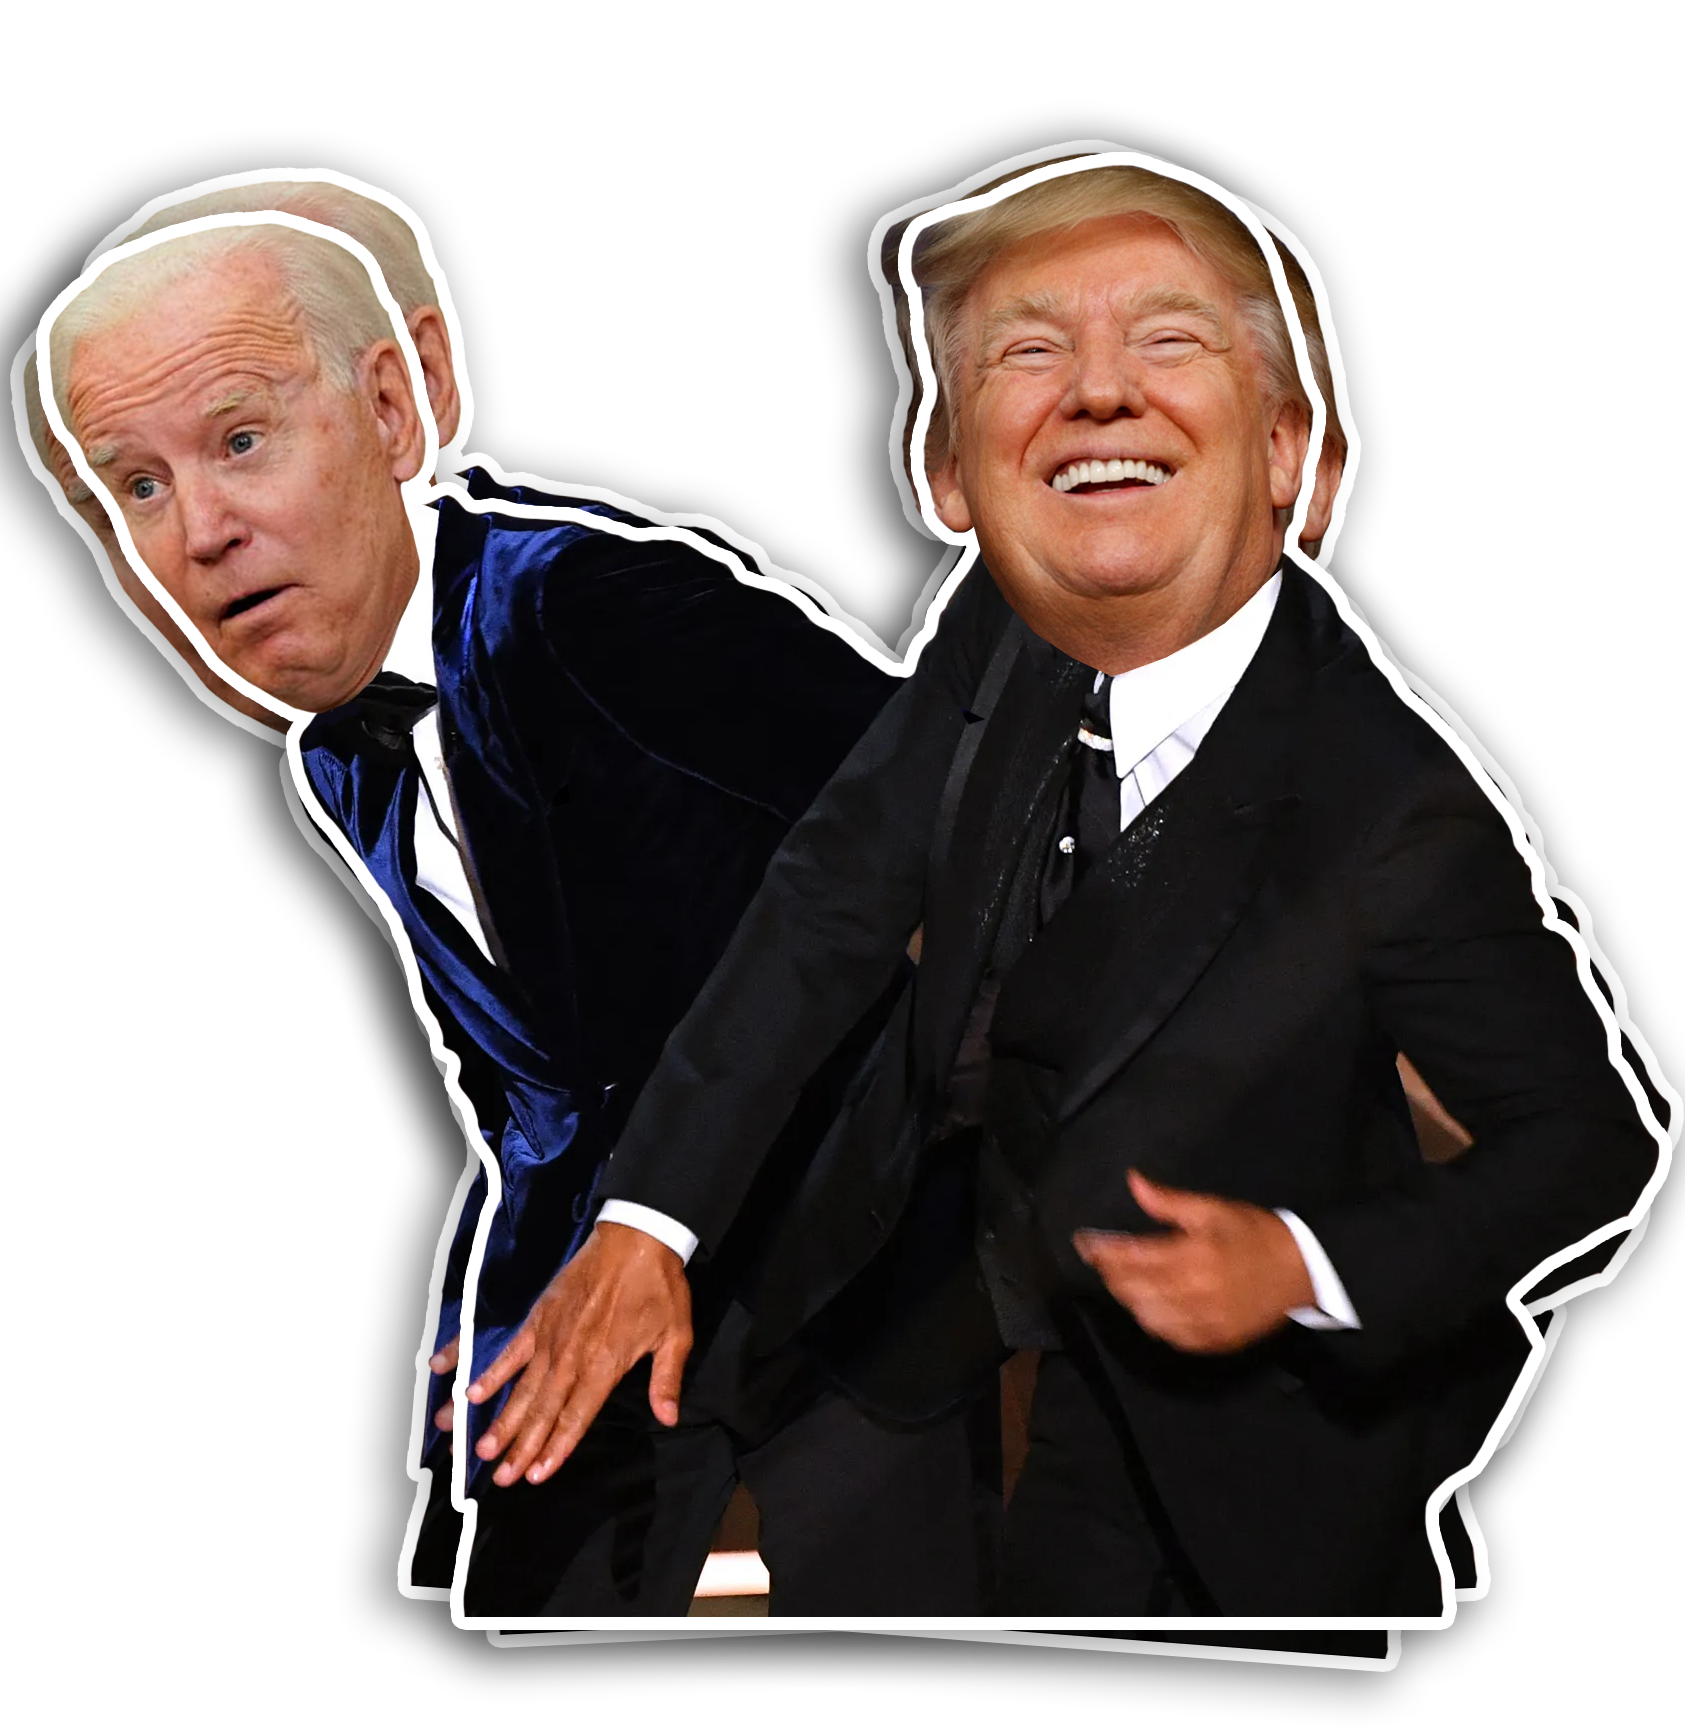 "Trump Slaps Biden" - Decal